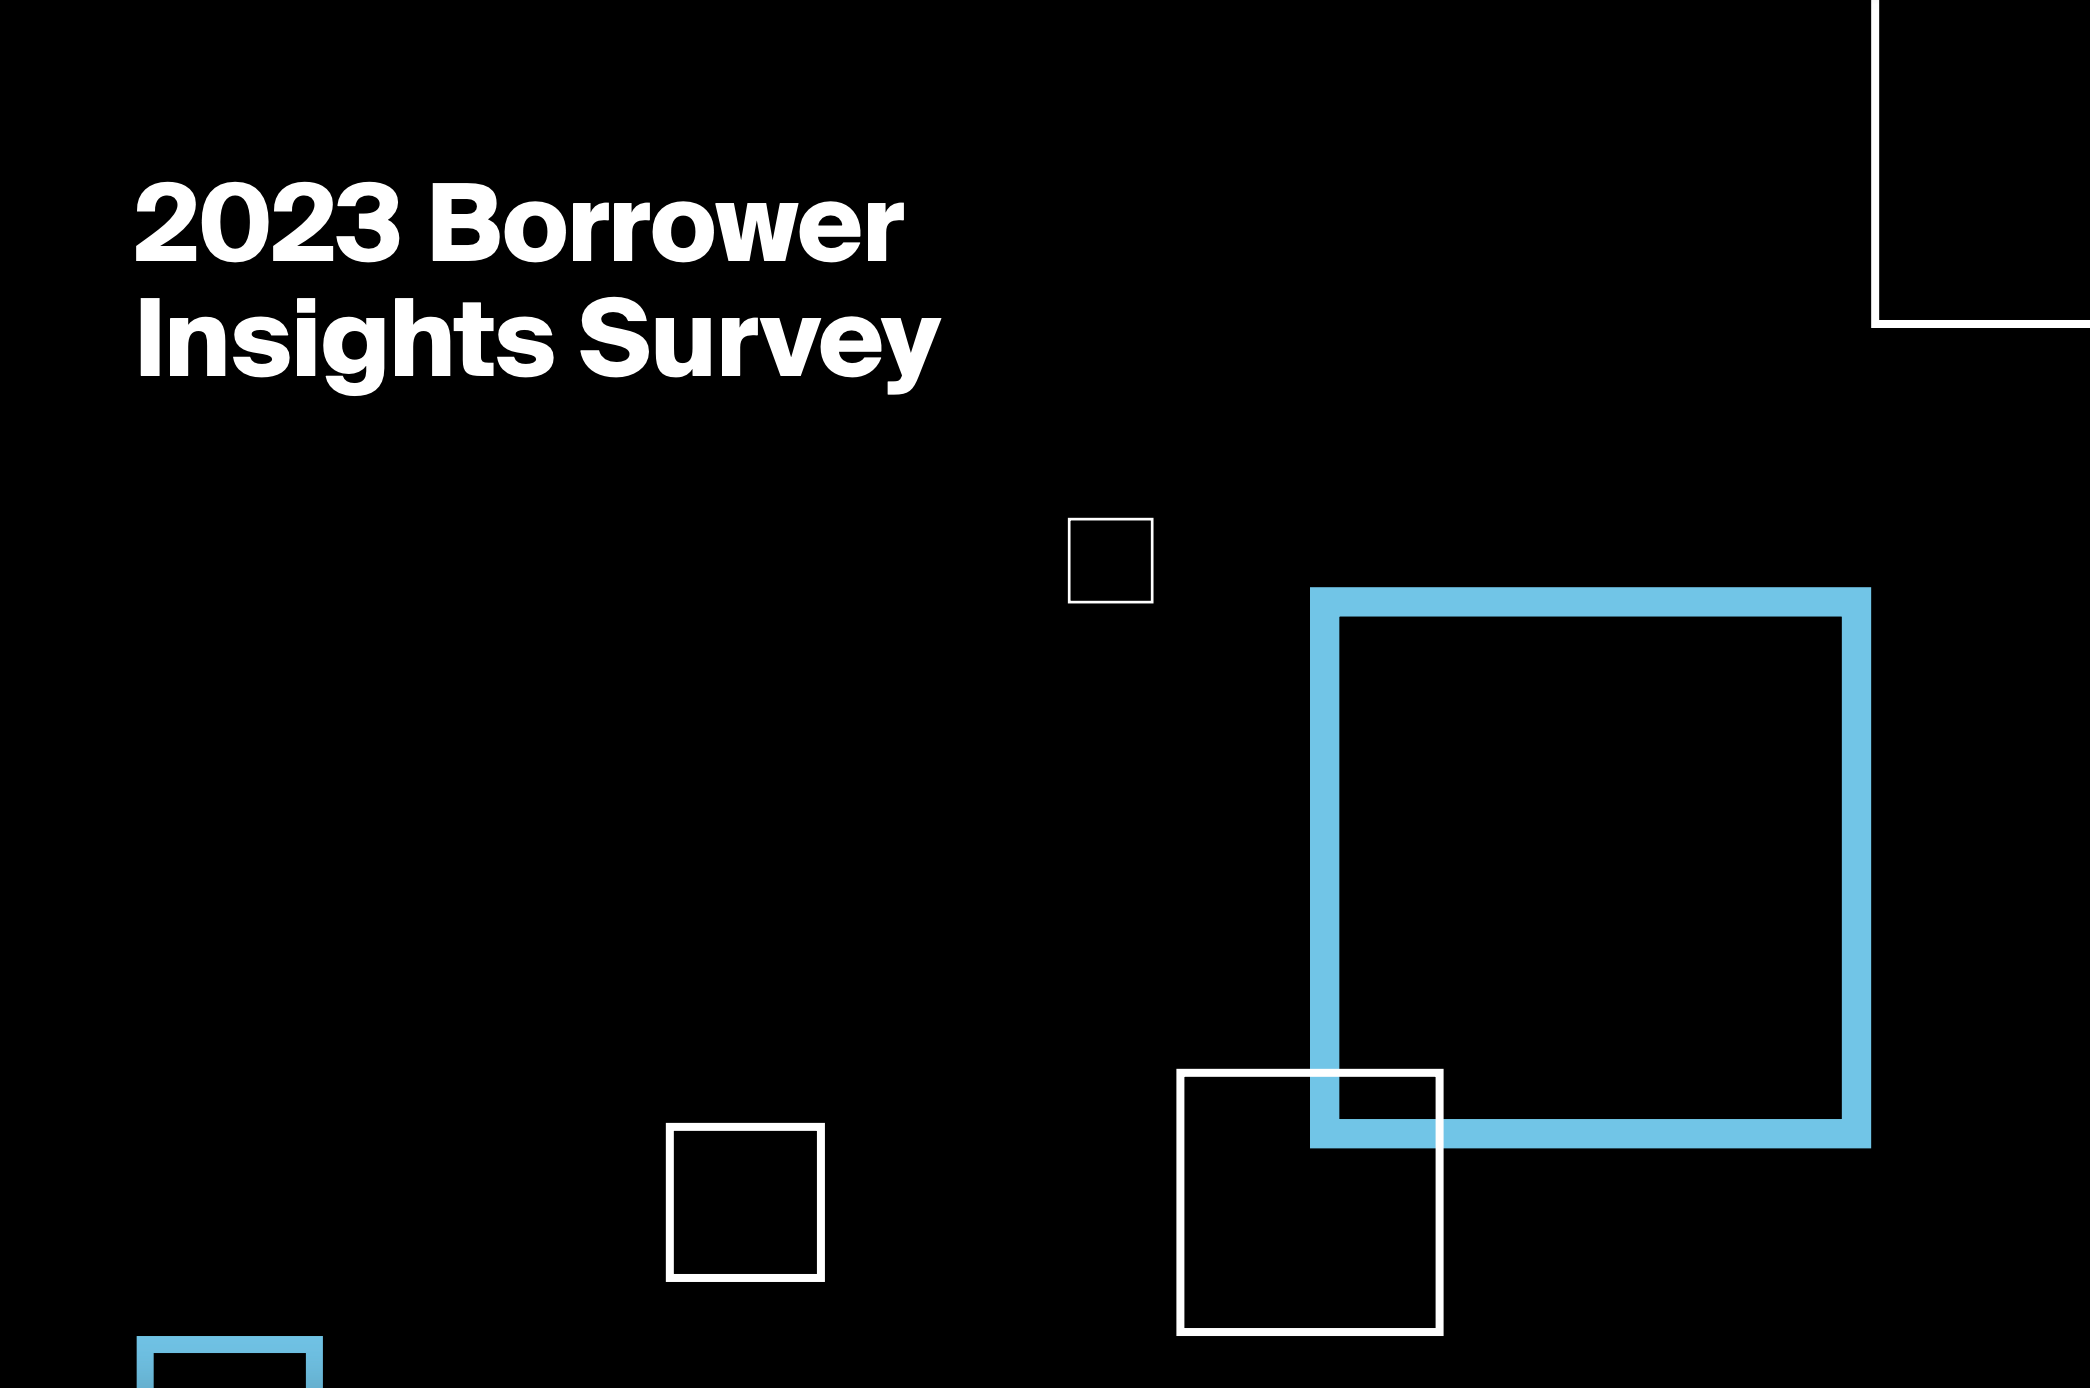 ebook-borrower-insights-survey-2023.png